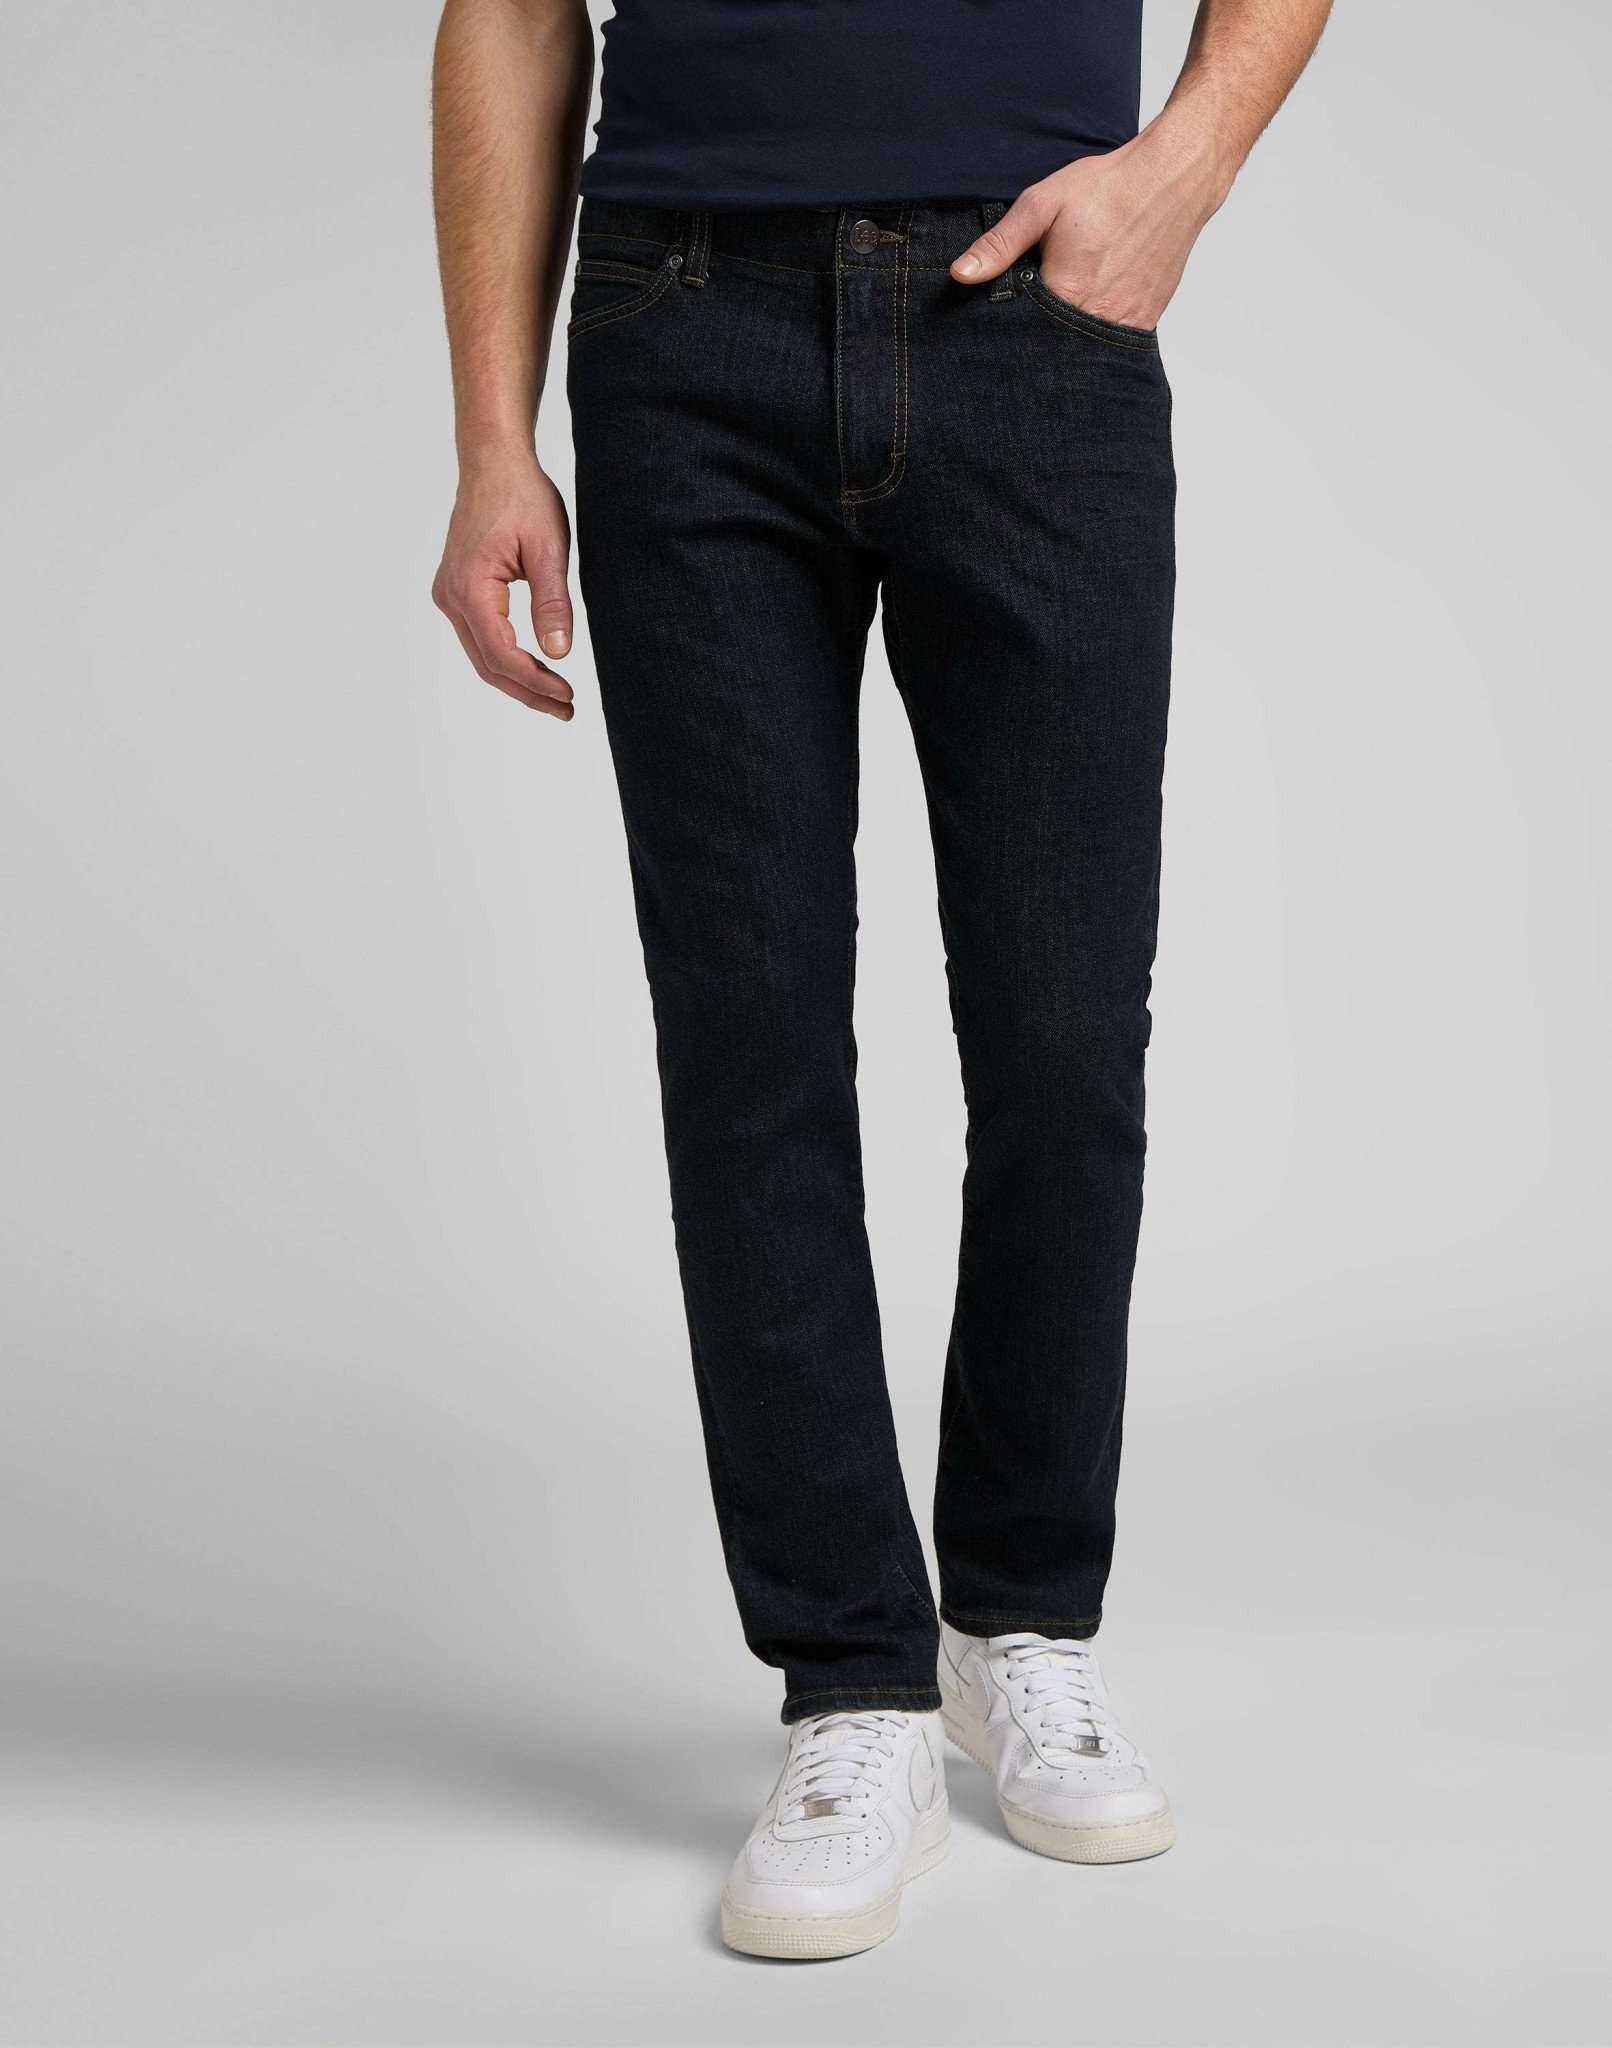 Jeans Skinny Fit Xm Herren Blau Denim L32/W42 von Lee